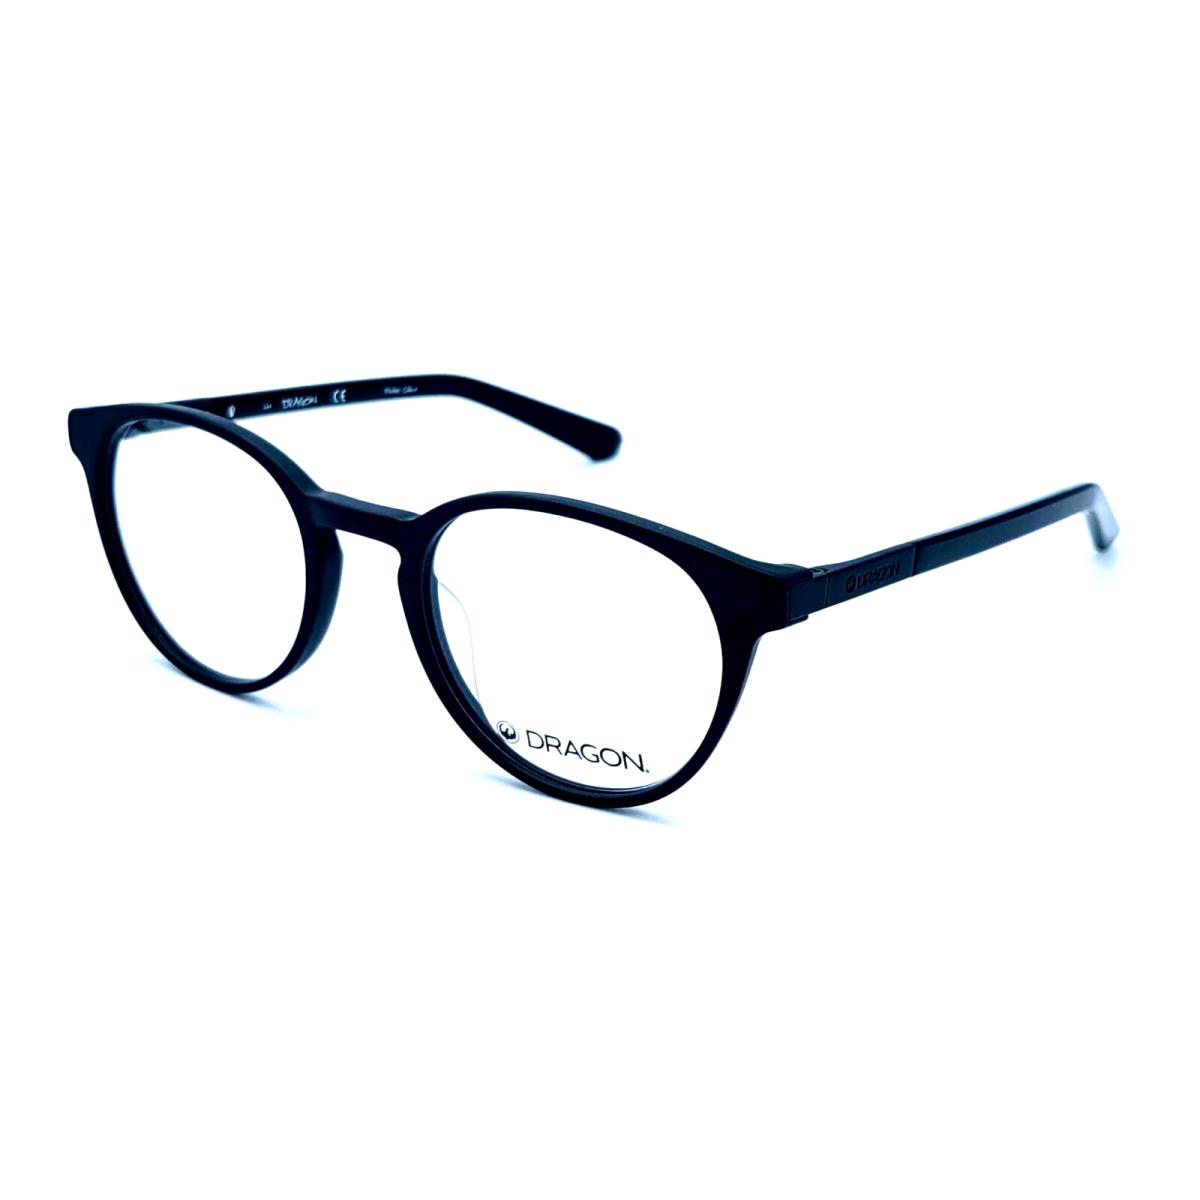 Dragon - DR2013 002 49/21/145 - Matte Black - Men Eyeglasses Frame